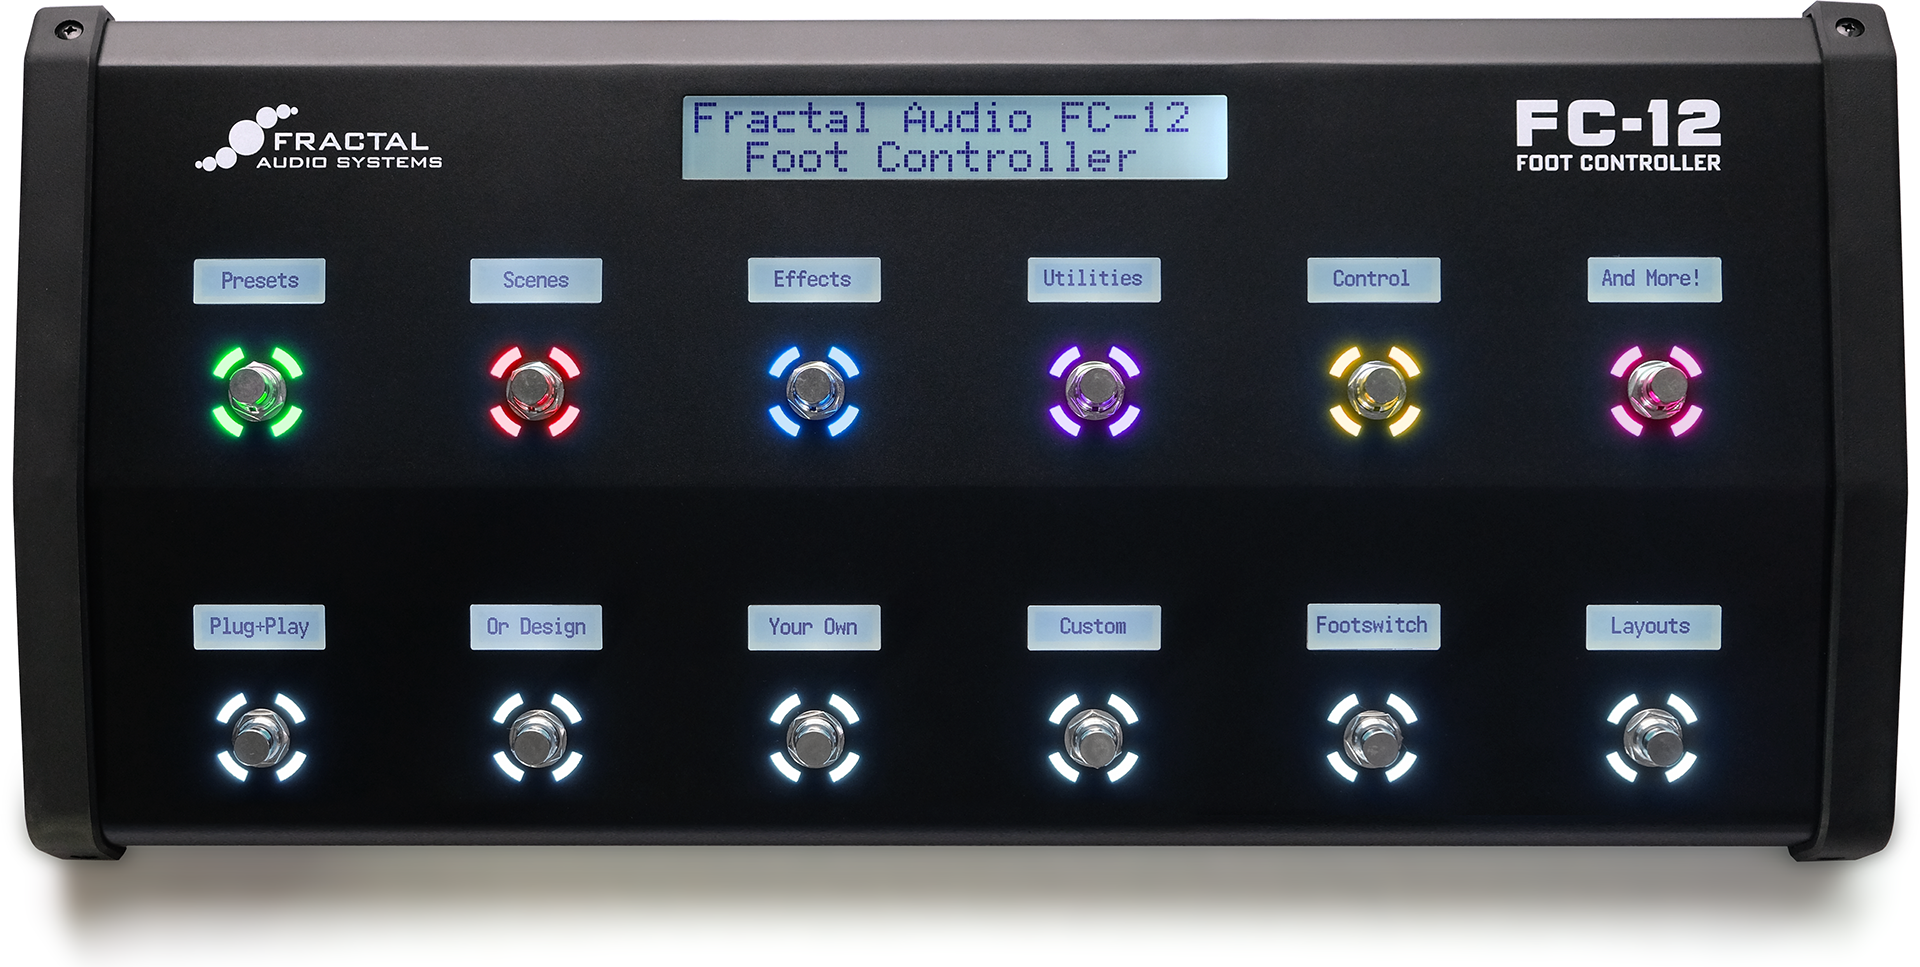 FC-12 Foot Controller